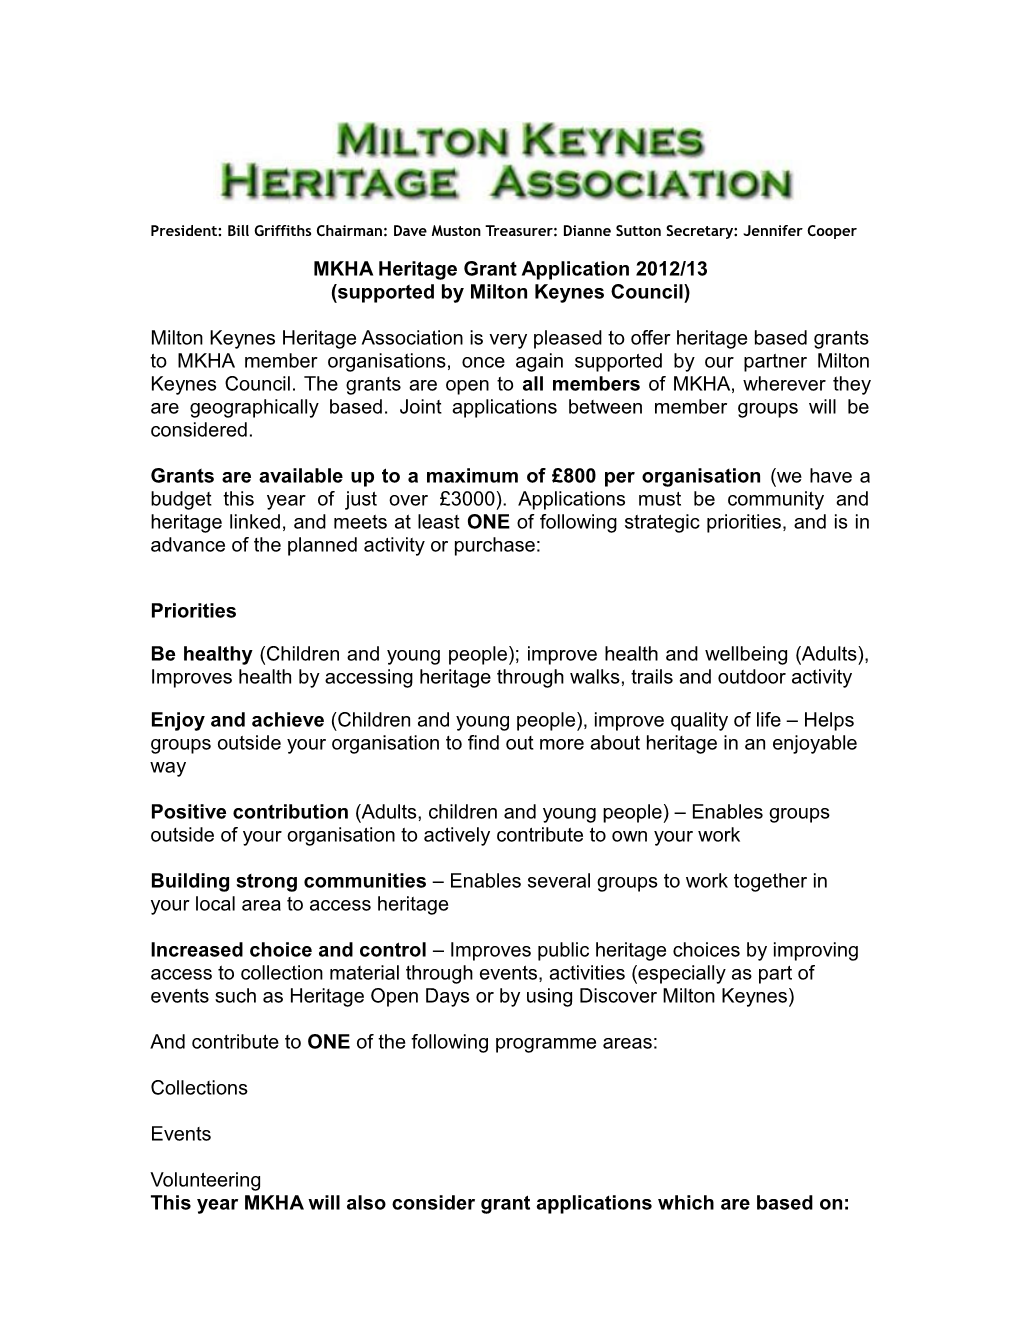 MKHA Heritage Grant Application 2012/13